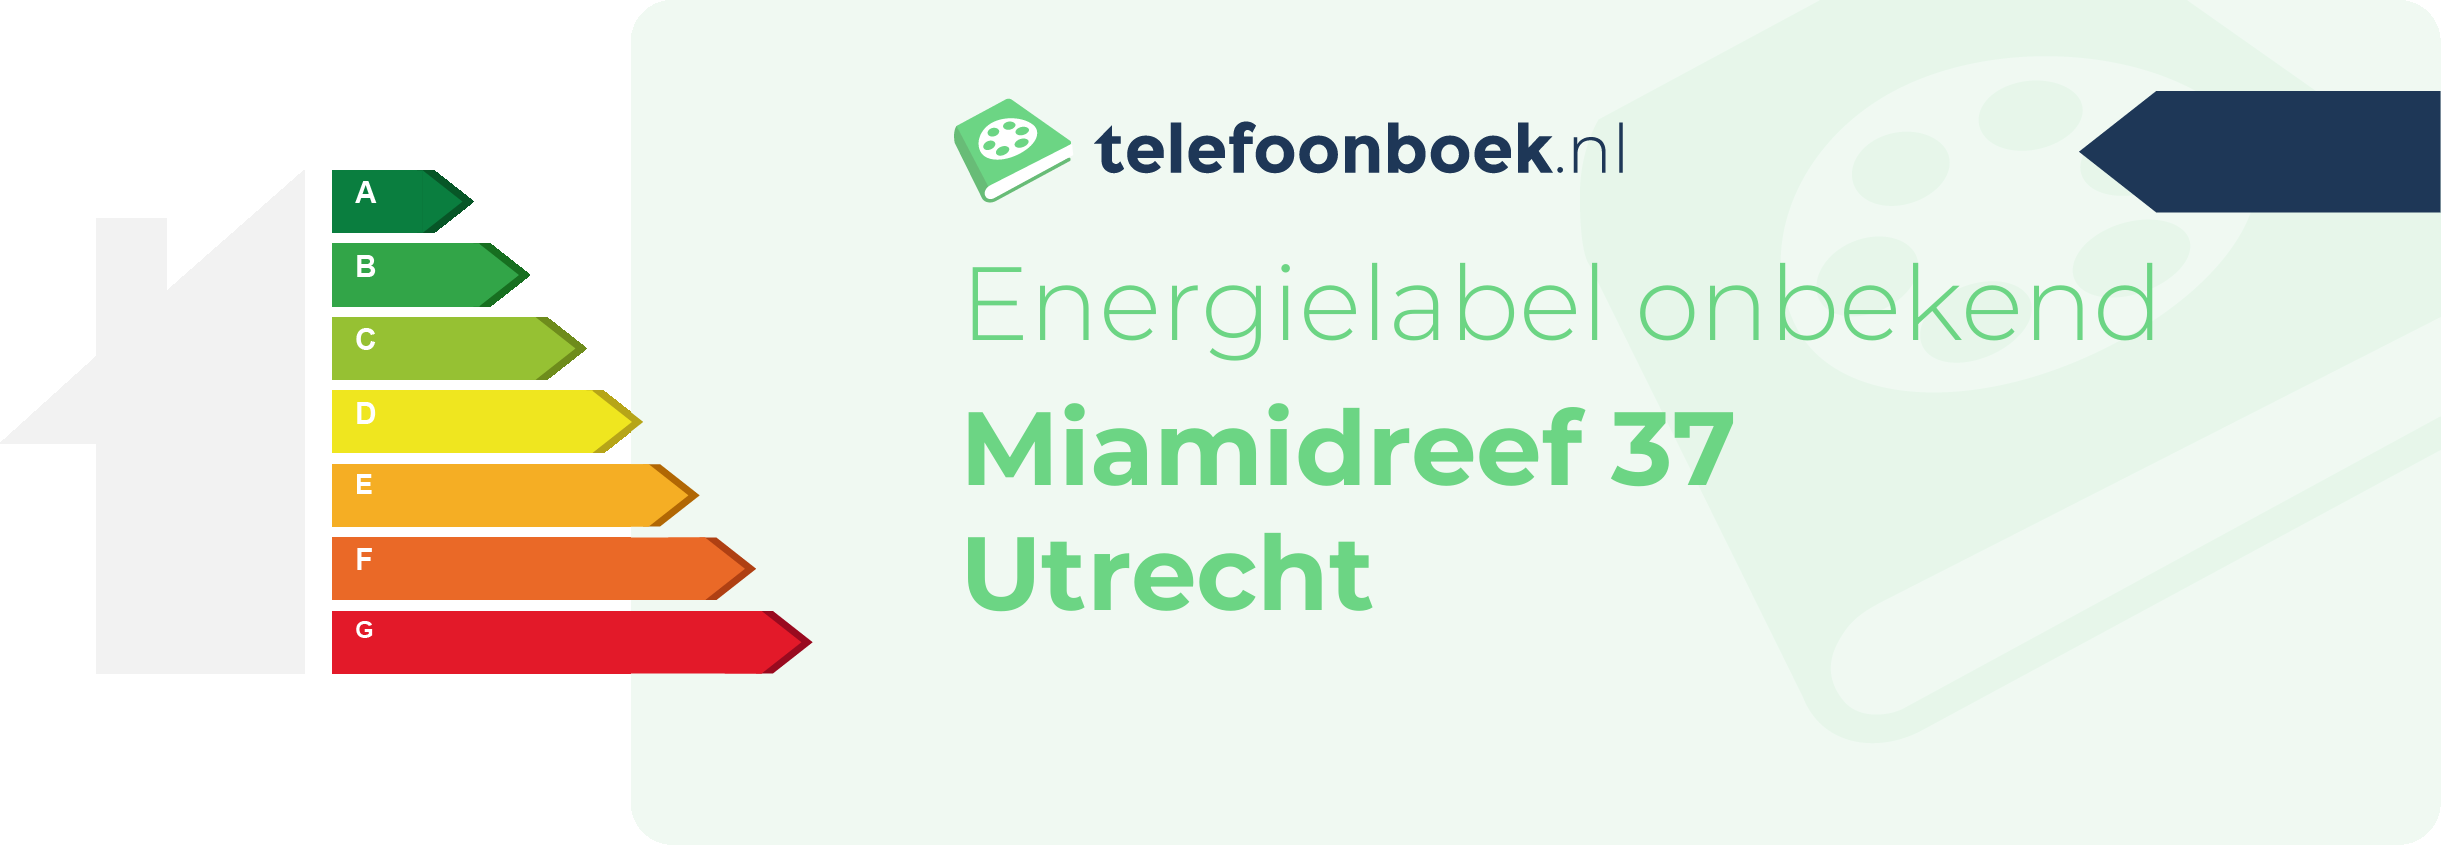 Energielabel Miamidreef 37 Utrecht